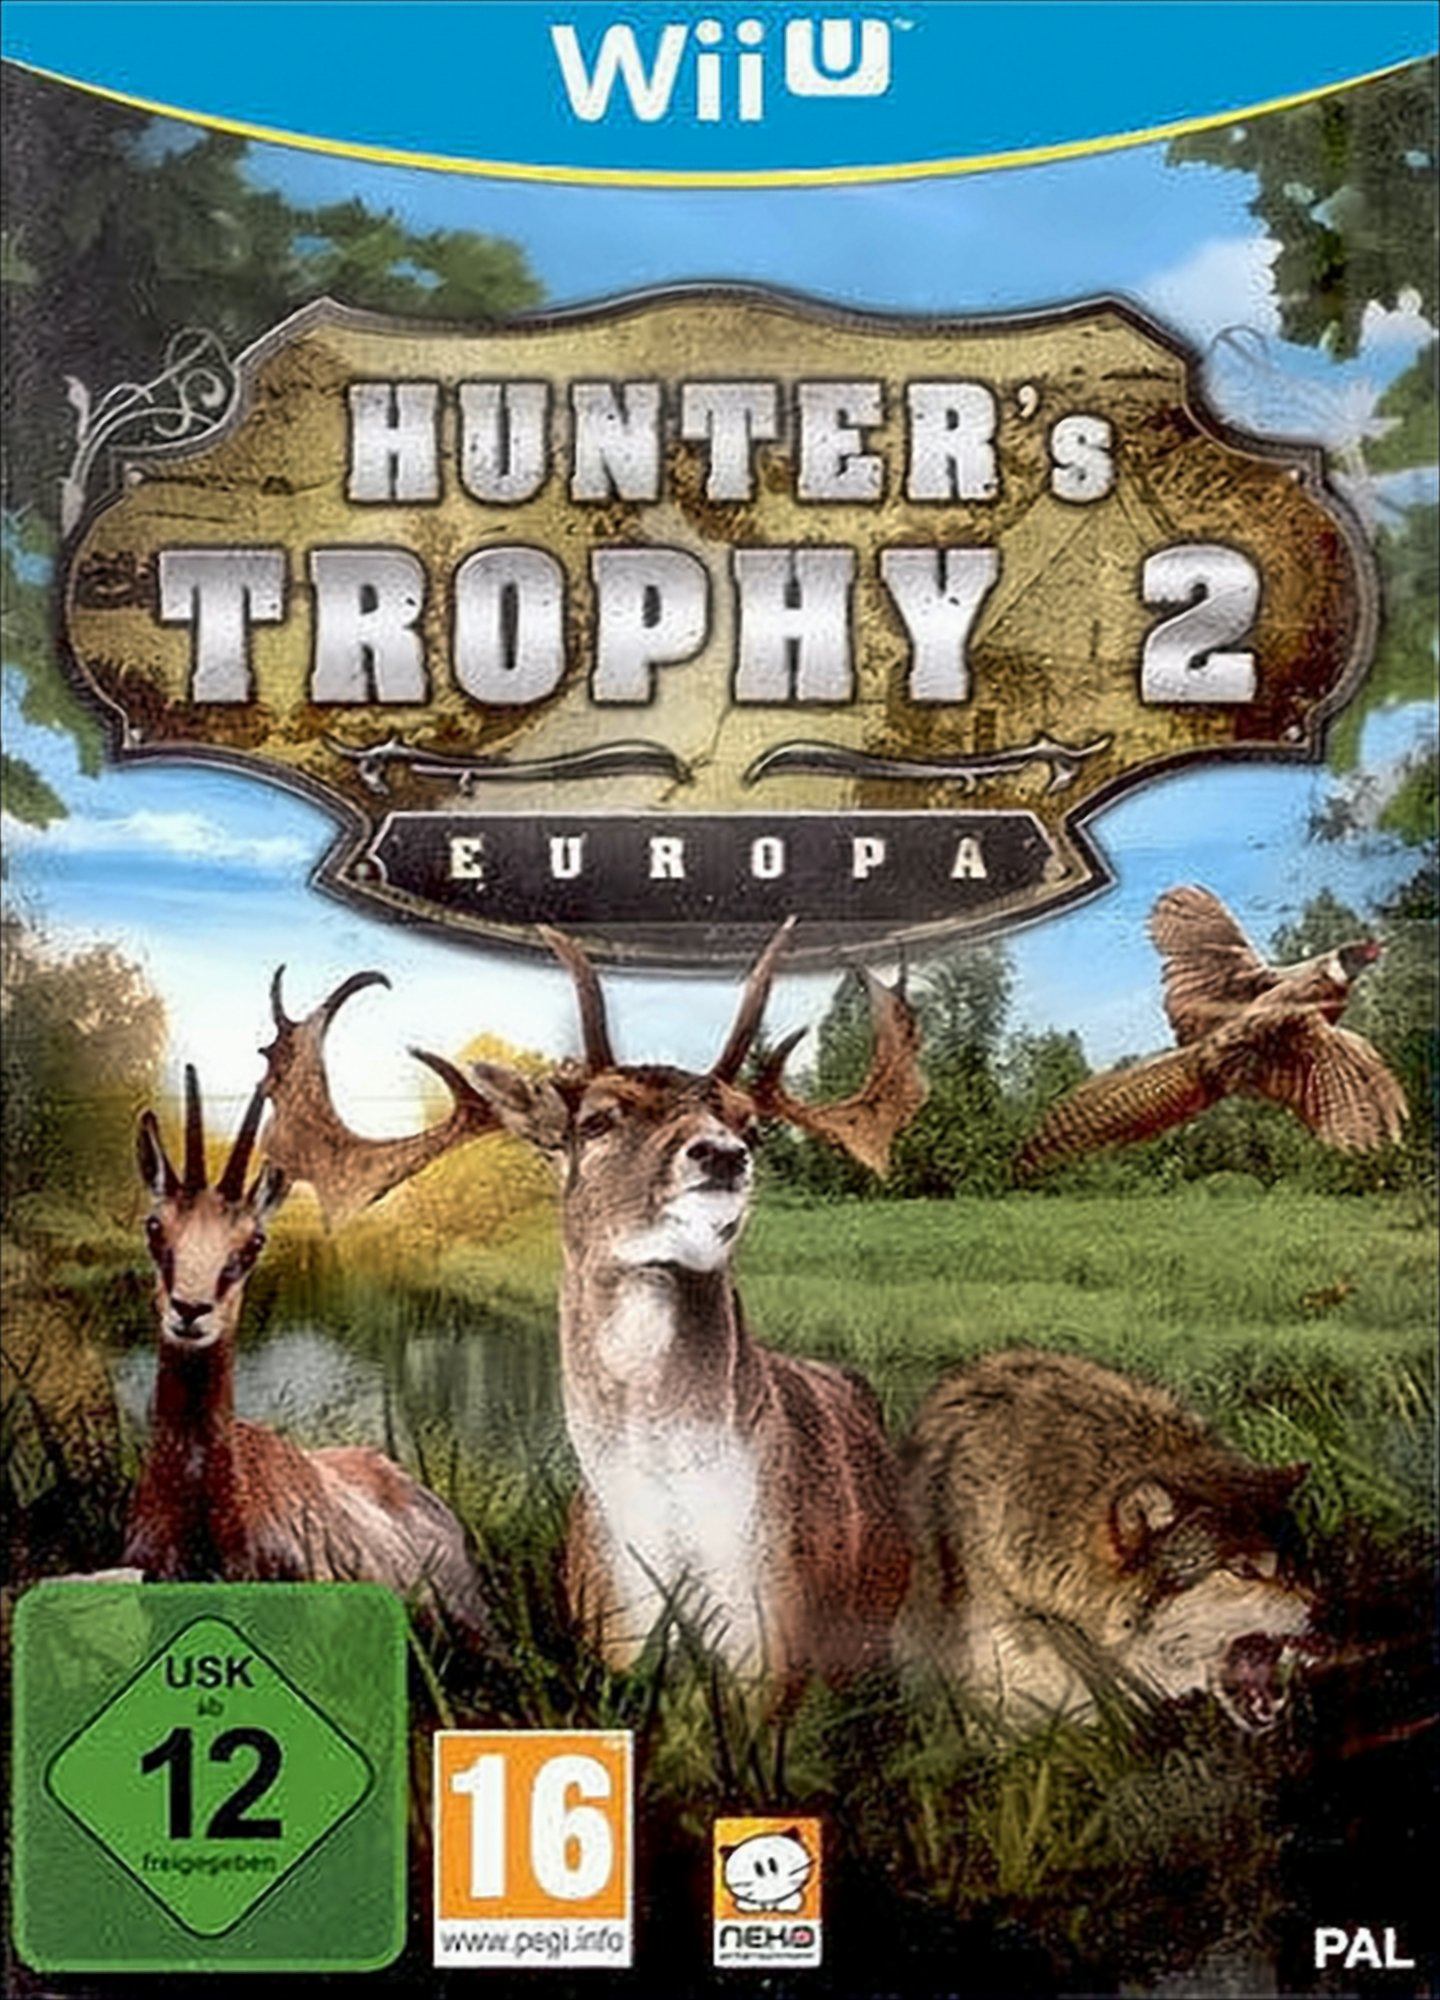 Hunters Wii] 2 Standalone Europa Trophy WiiU - [Nintendo